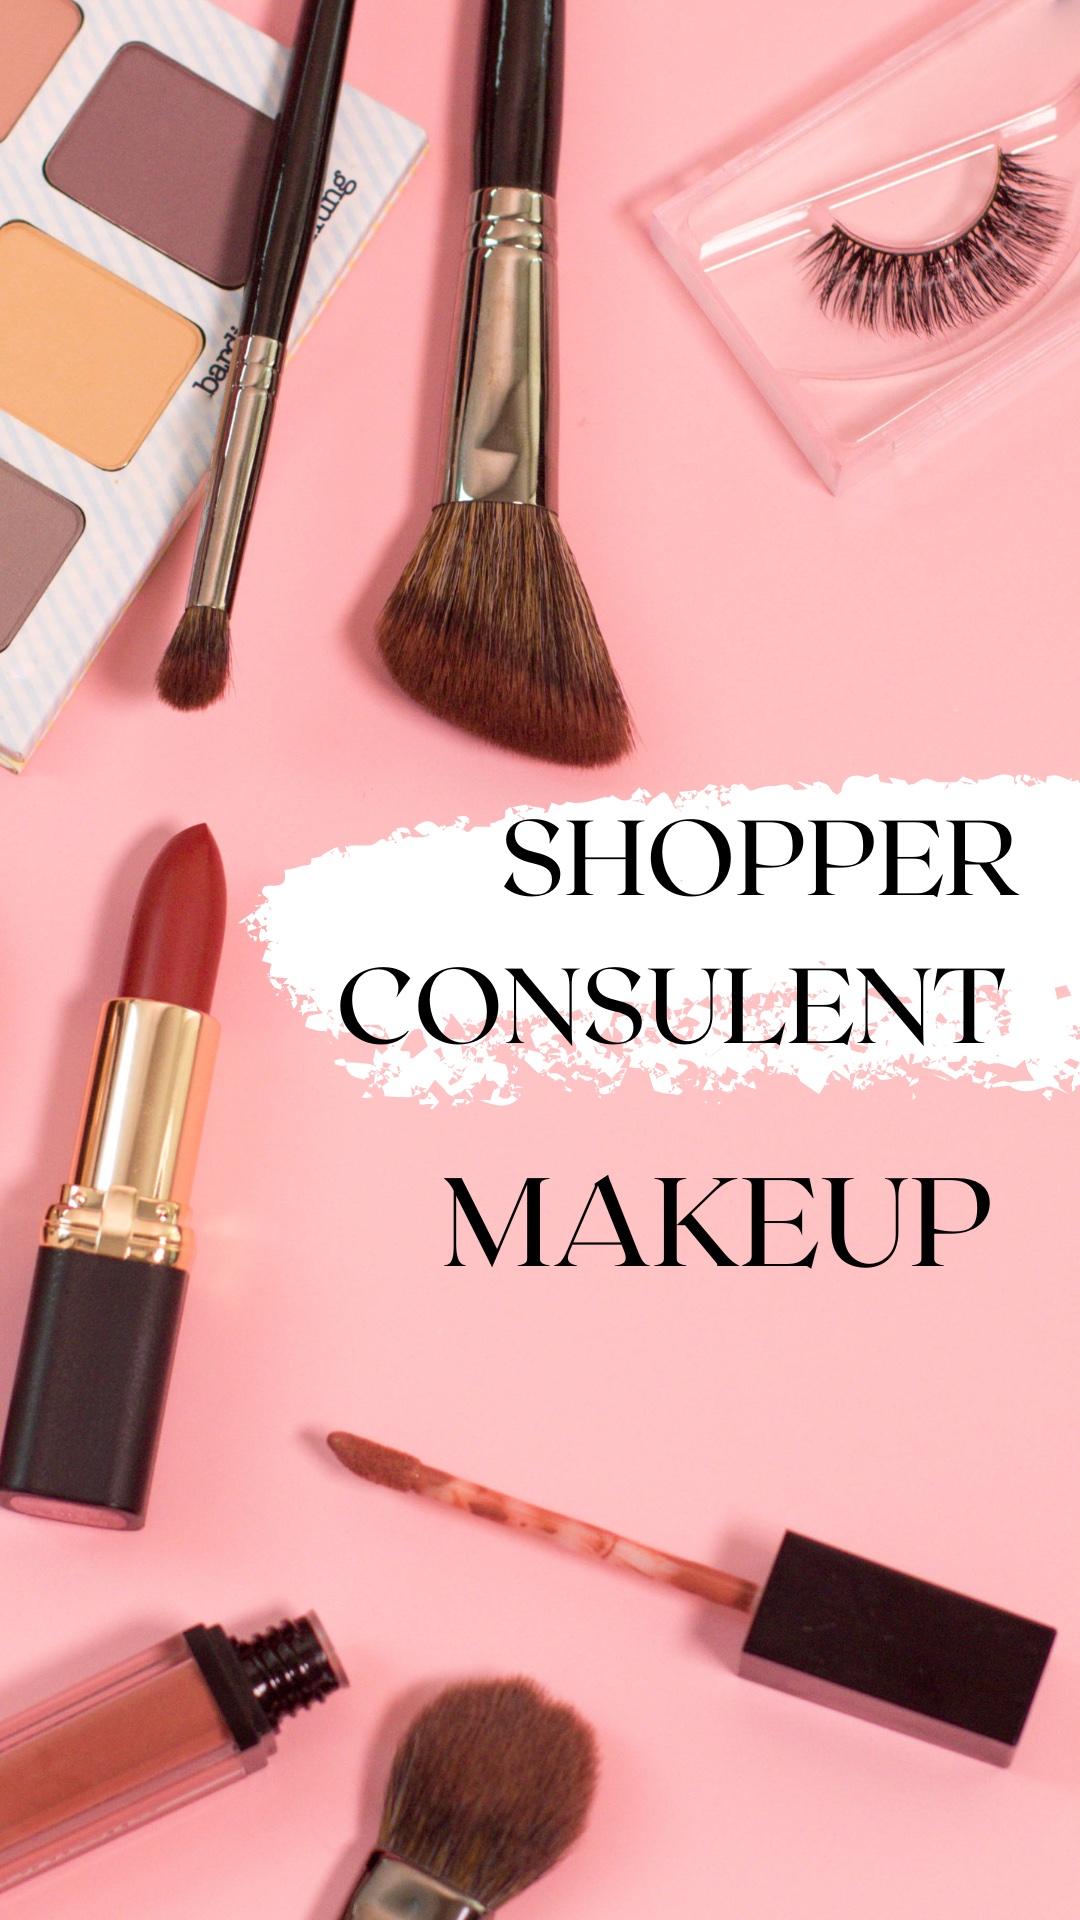 Shopper consulent make-up Roma e zone limitrofe